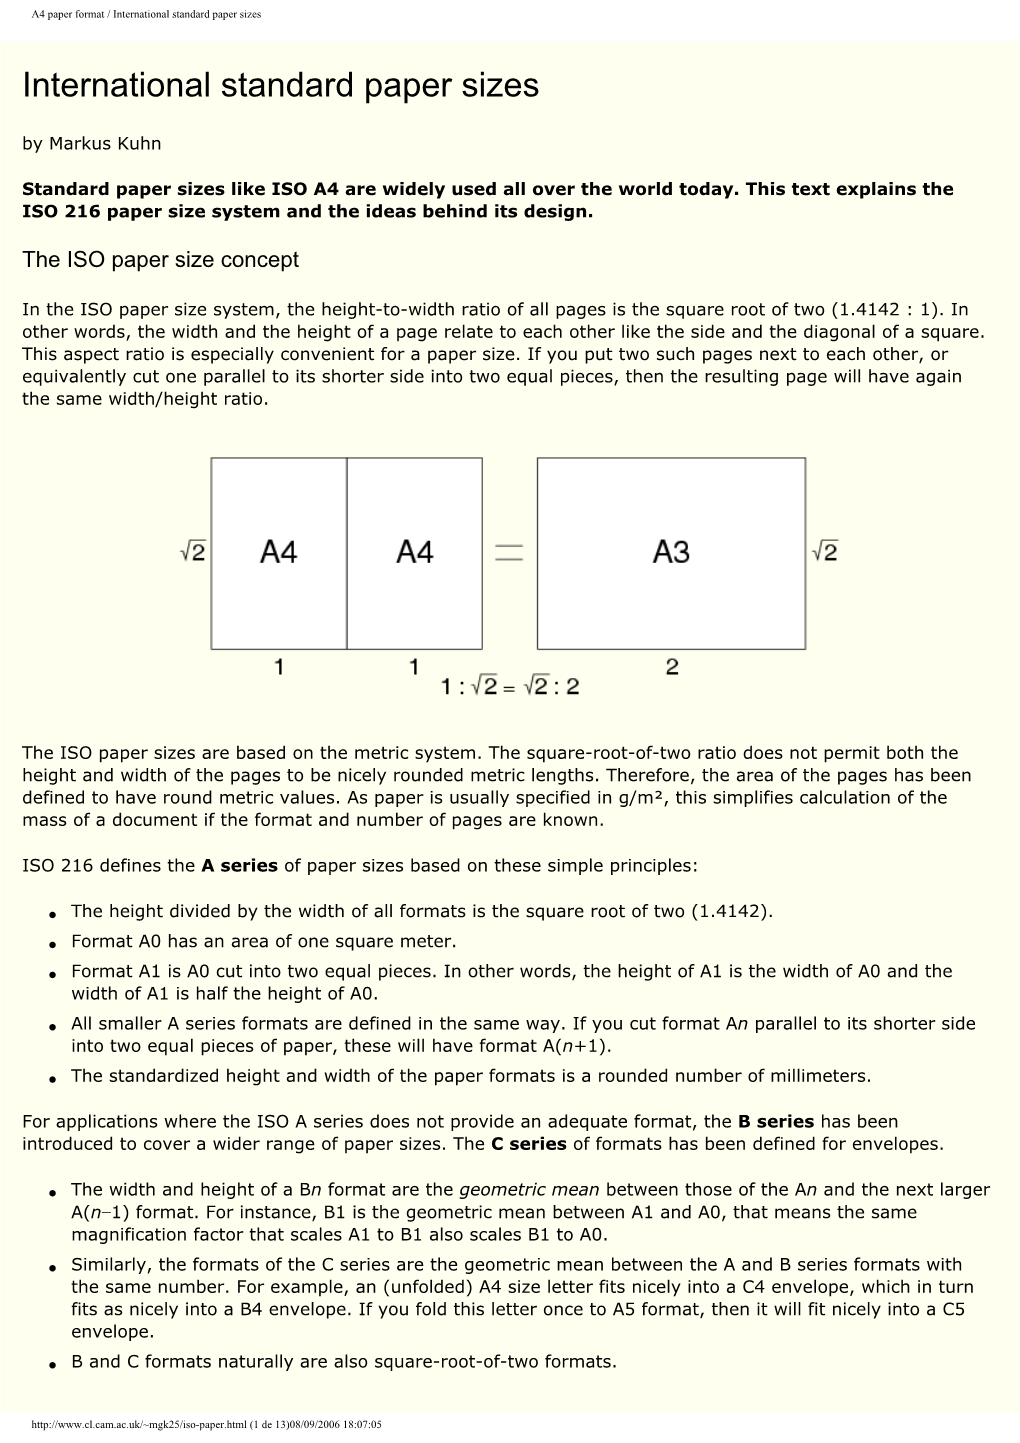 A4 Paper Format / International Standard Paper Sizes